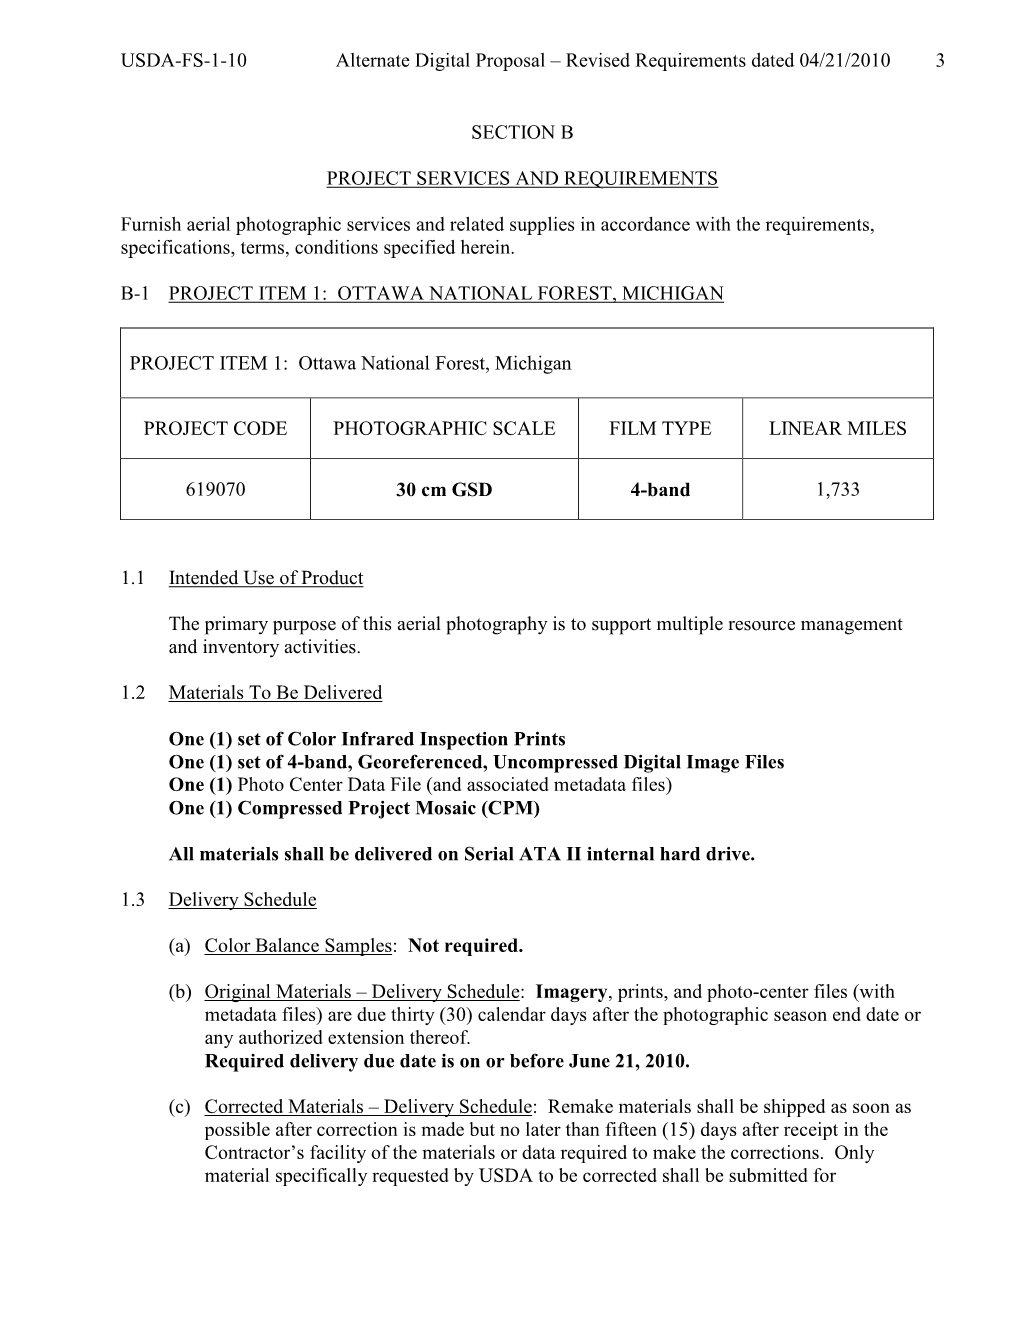 USDA-FS-1-10 Alternate Digital Proposal – Revised Requirements Dated 04/21/2010 3